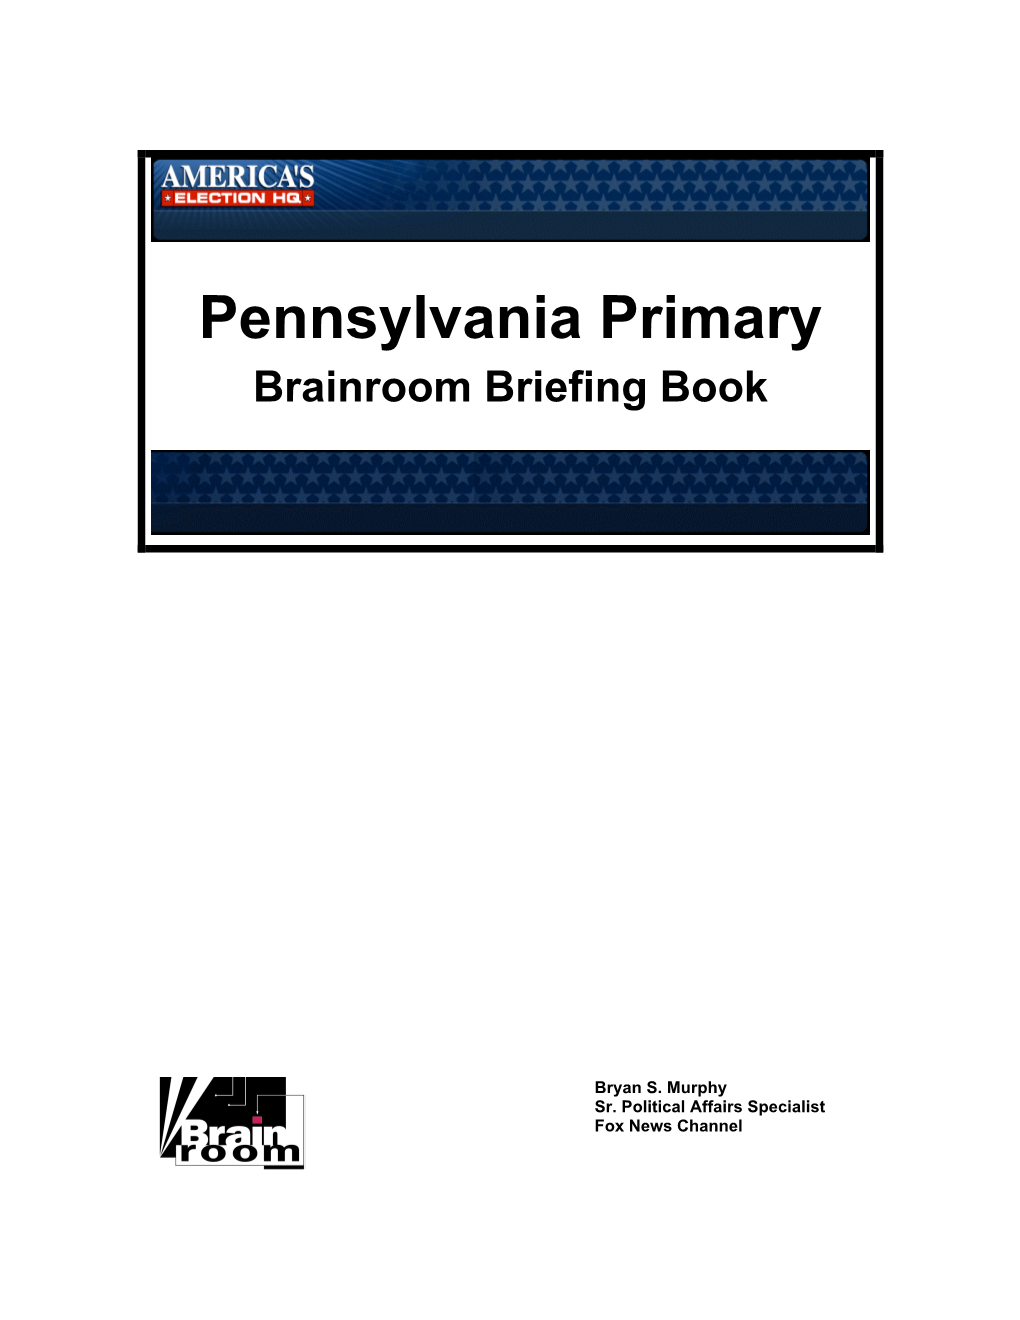 Pennsylvania Primary Brainroom Briefing Book